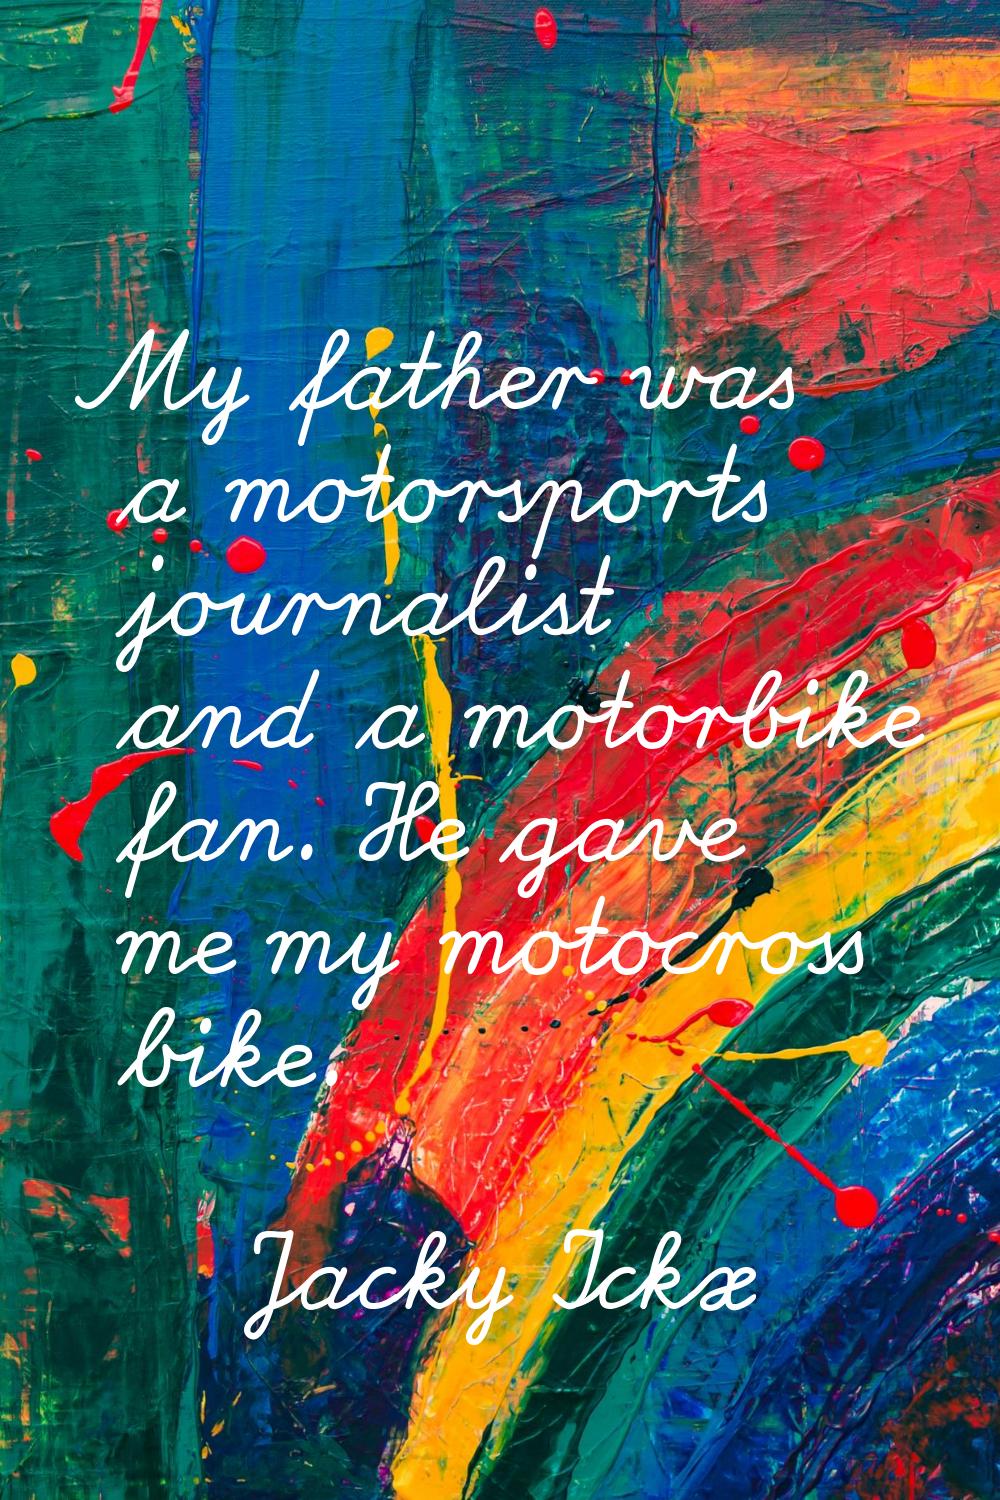 My father was a motorsports journalist and a motorbike fan. He gave me my motocross bike.